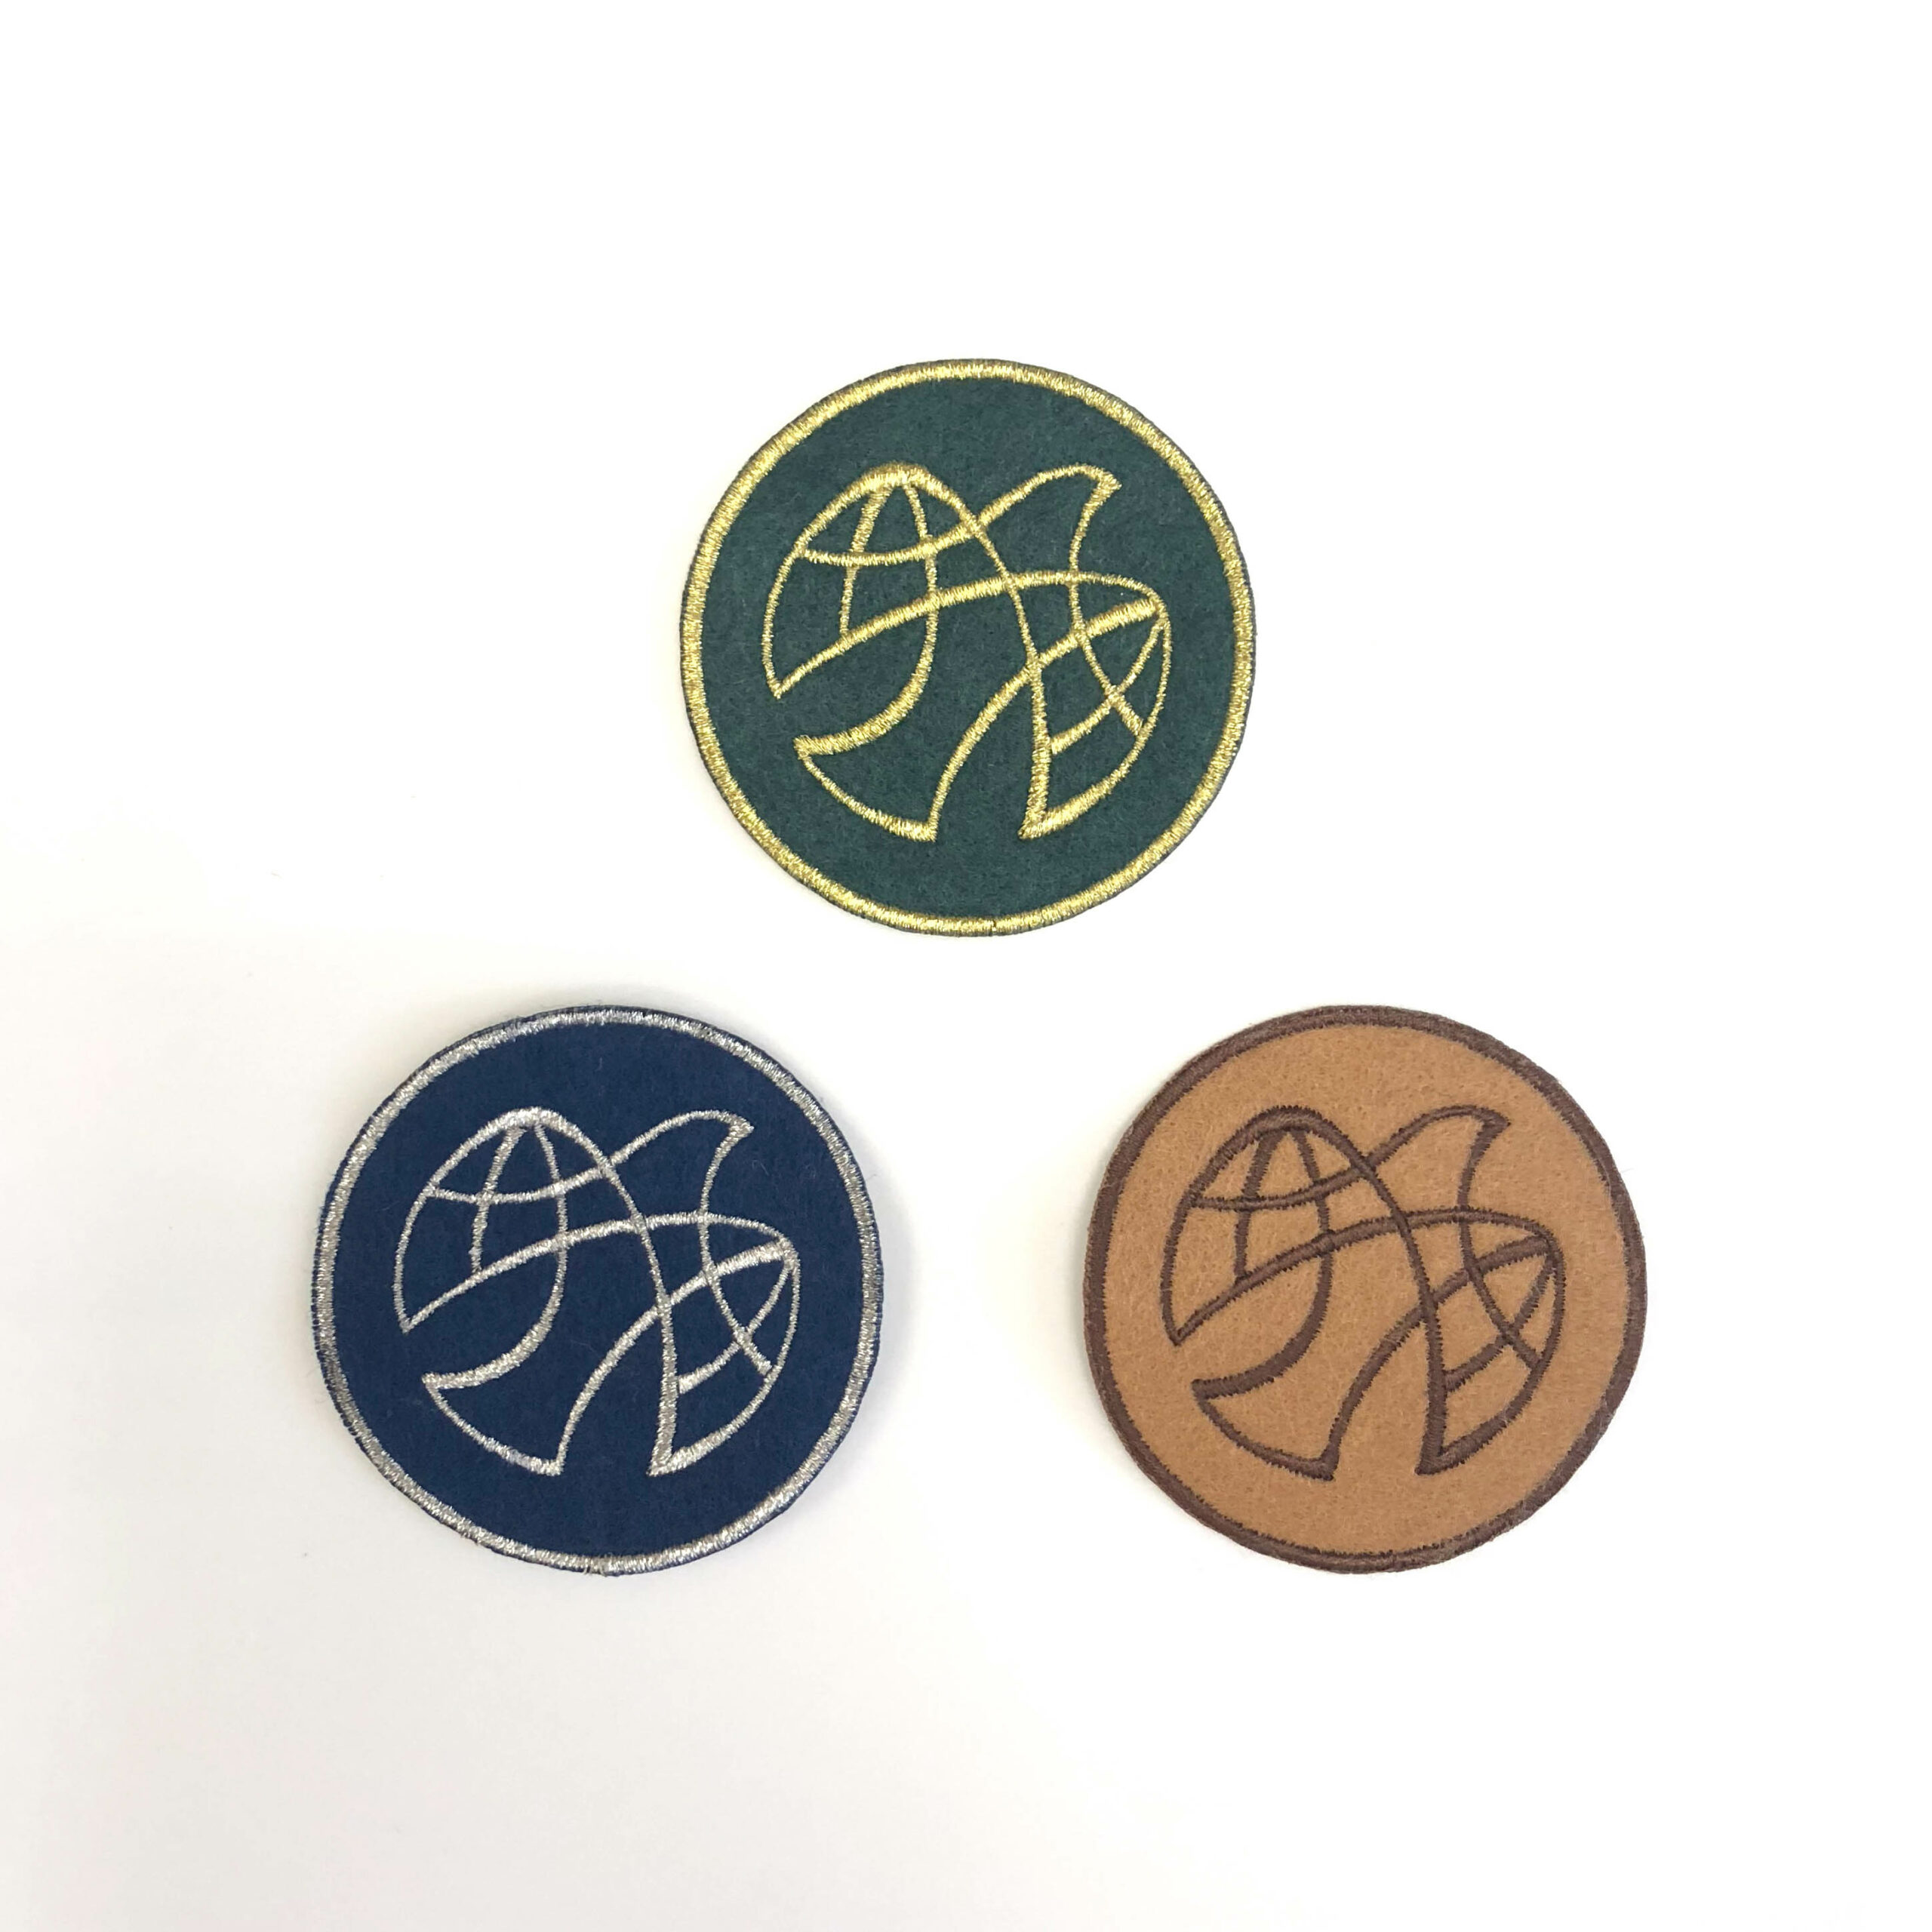 AYP Gold / Silver/ Bronze Badges